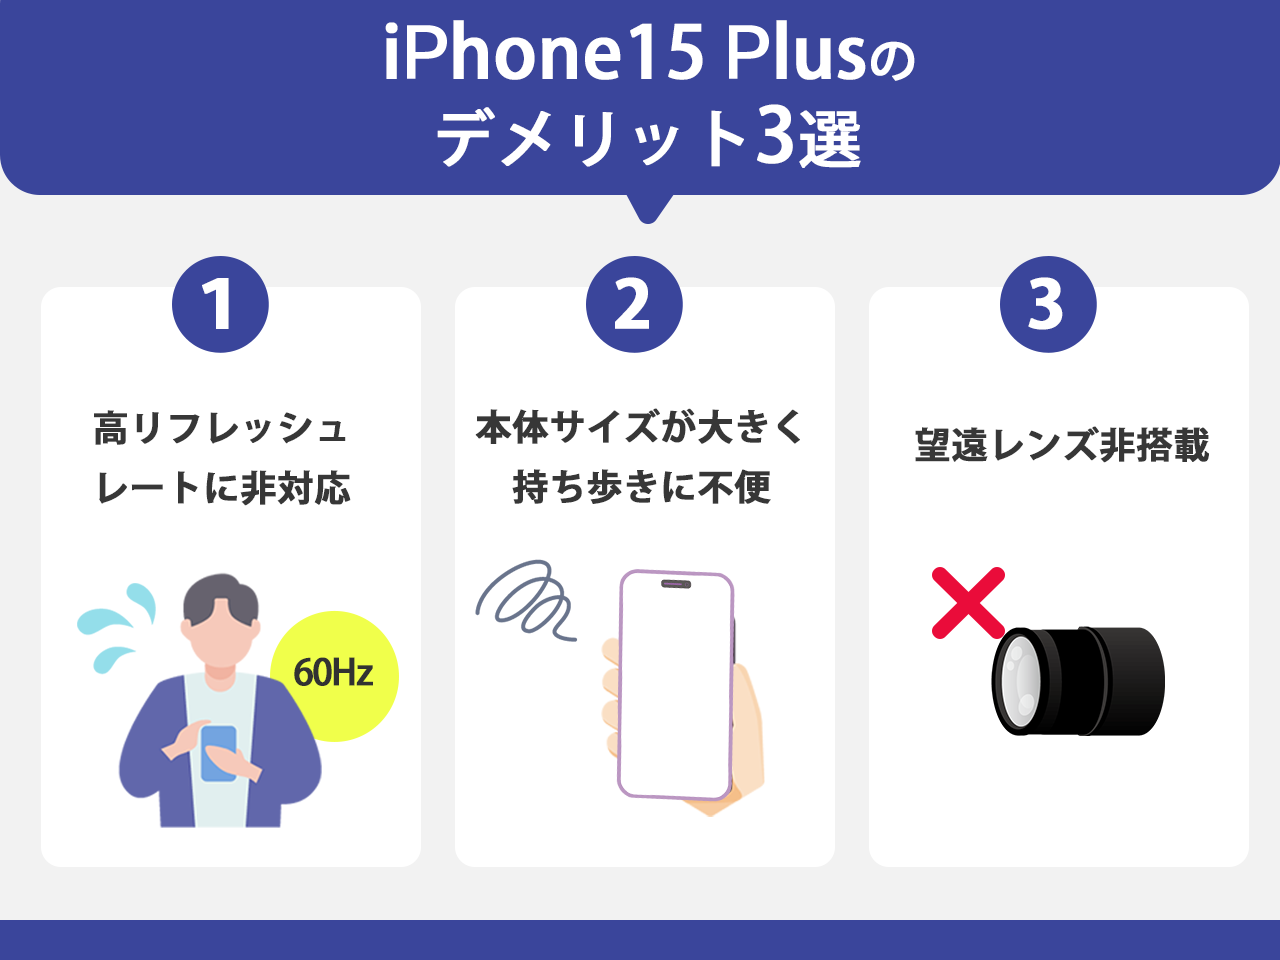 iPhone15 Plusのデメリット